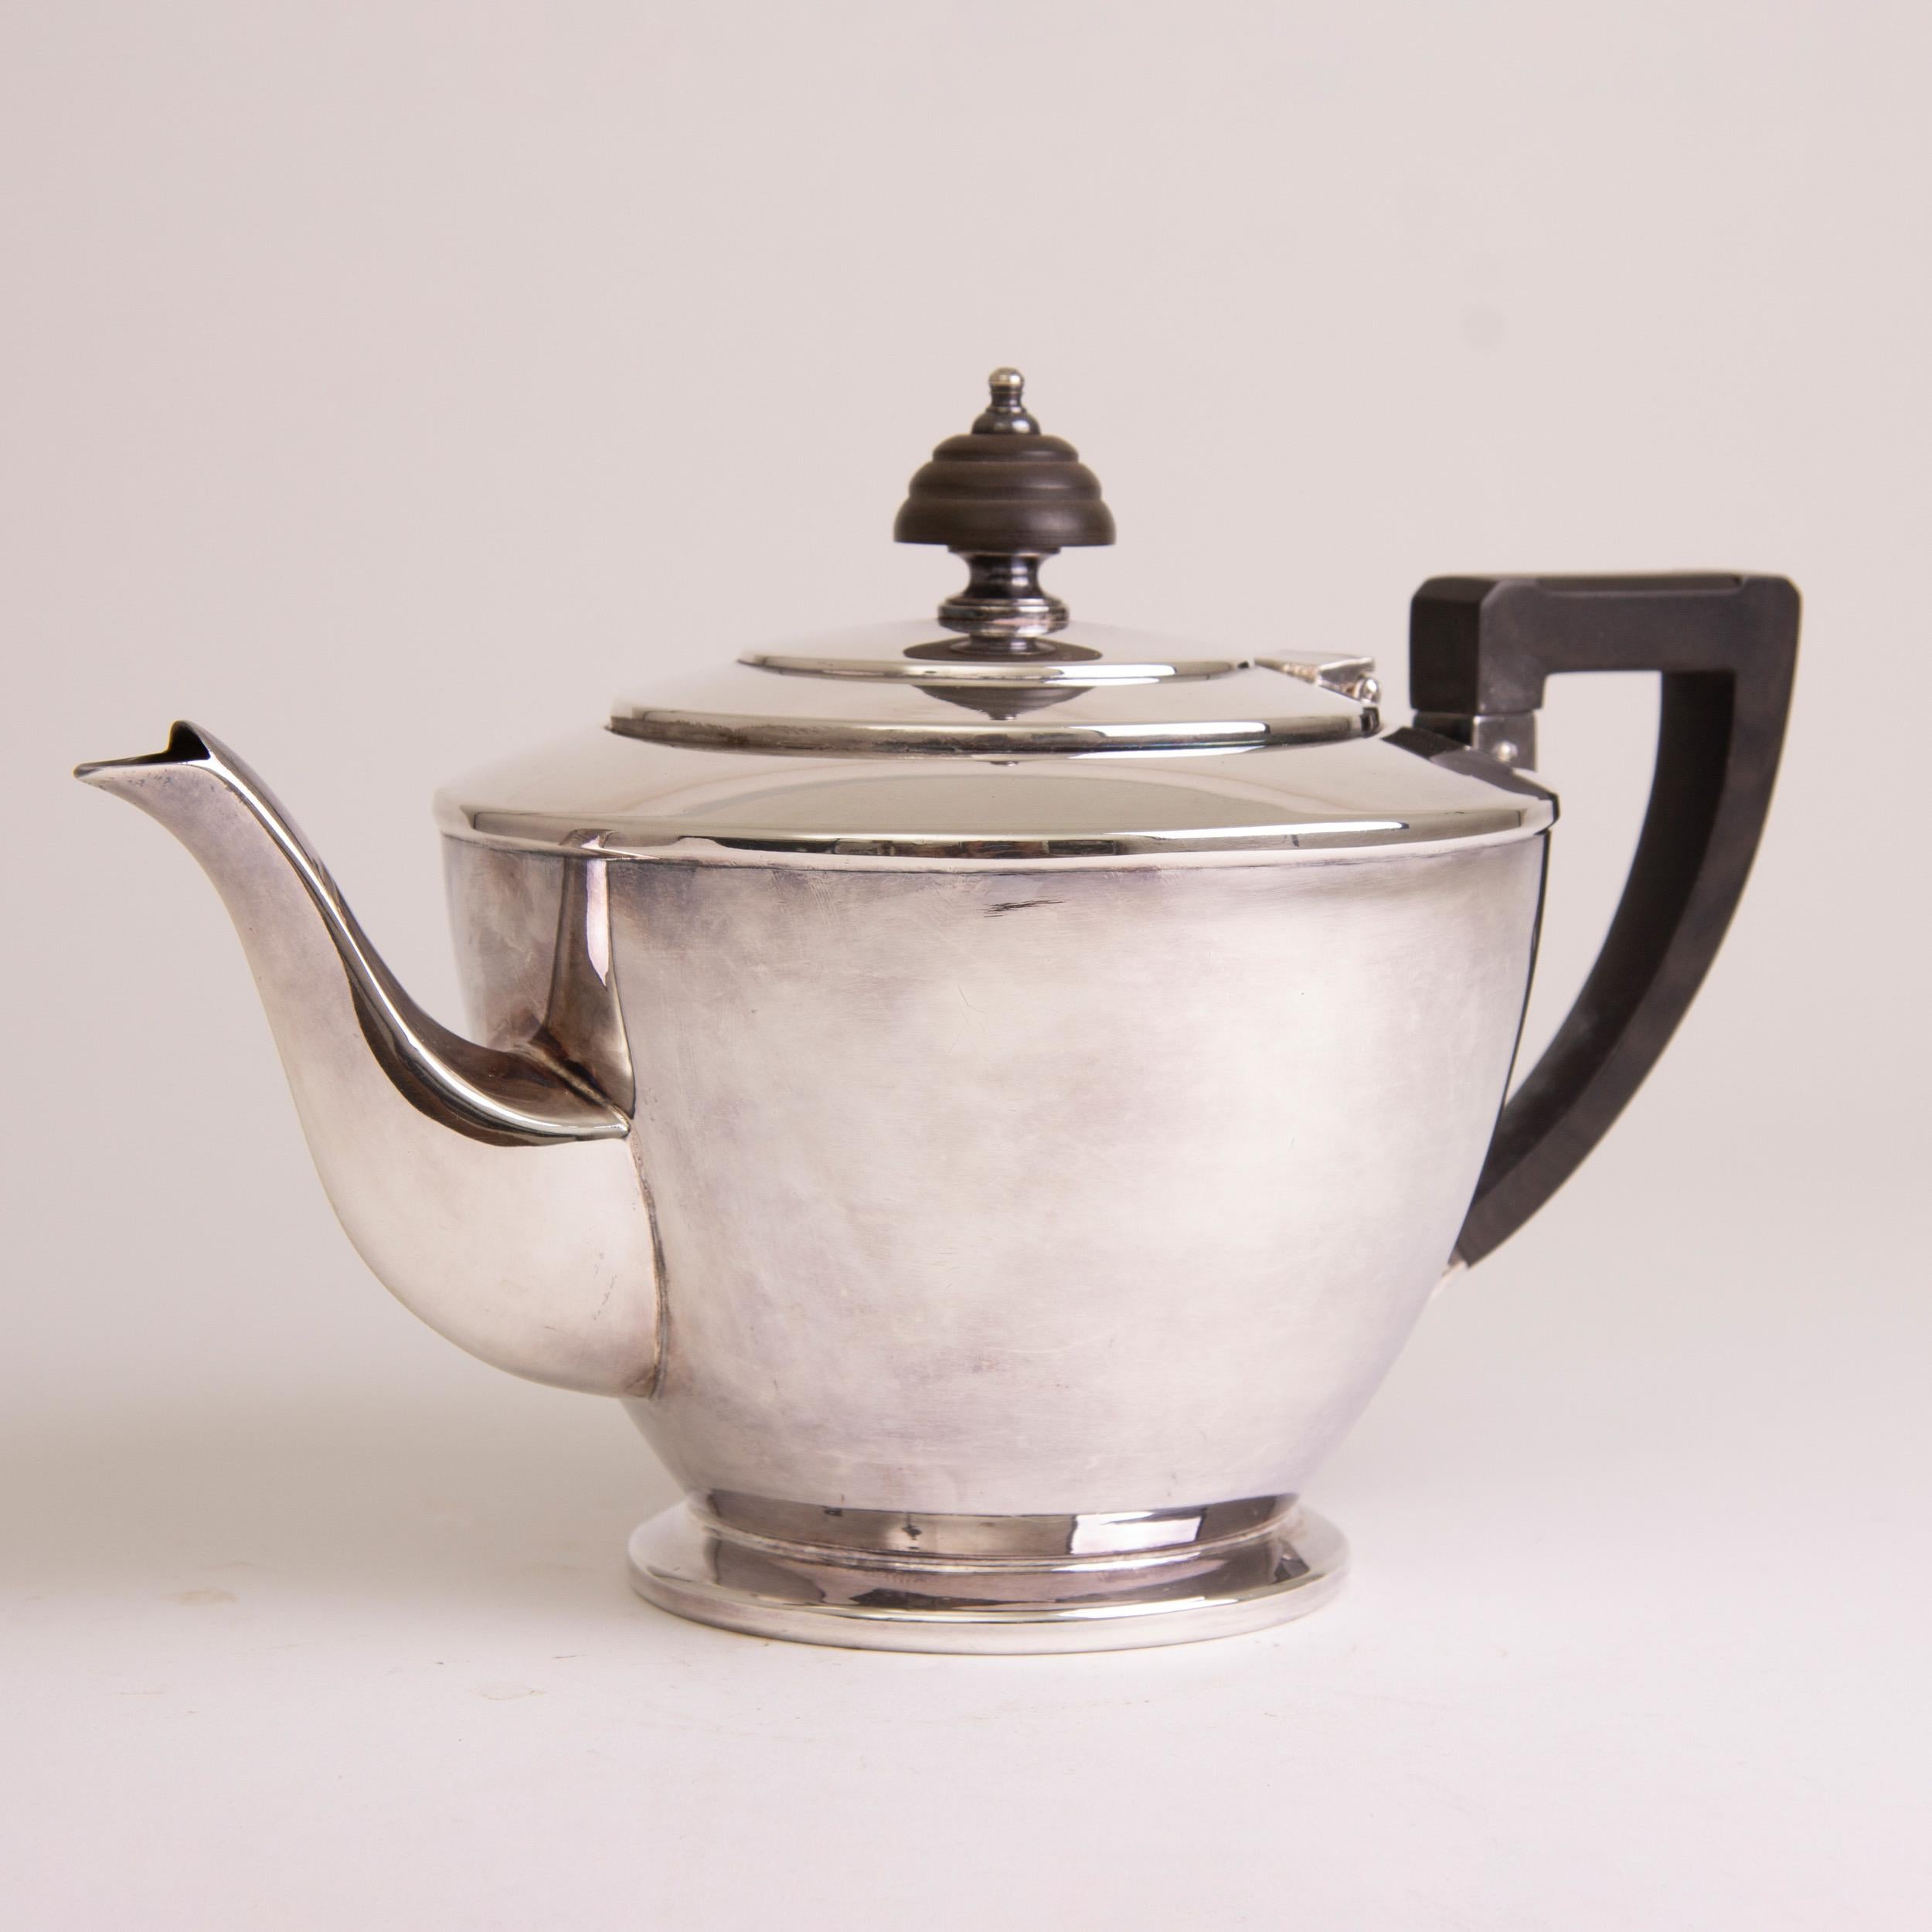 Art Deco silver plate tea service by Mappin and Web
Comprising.
Measures: Tea pot H 17 cm
Coffee pot H 21 cm
Hot water H 21 cm
Milk jug H 10 cm
Sugar bowl H 8 cm
Tea strainer H 4.5 cm
British, circa 1930.